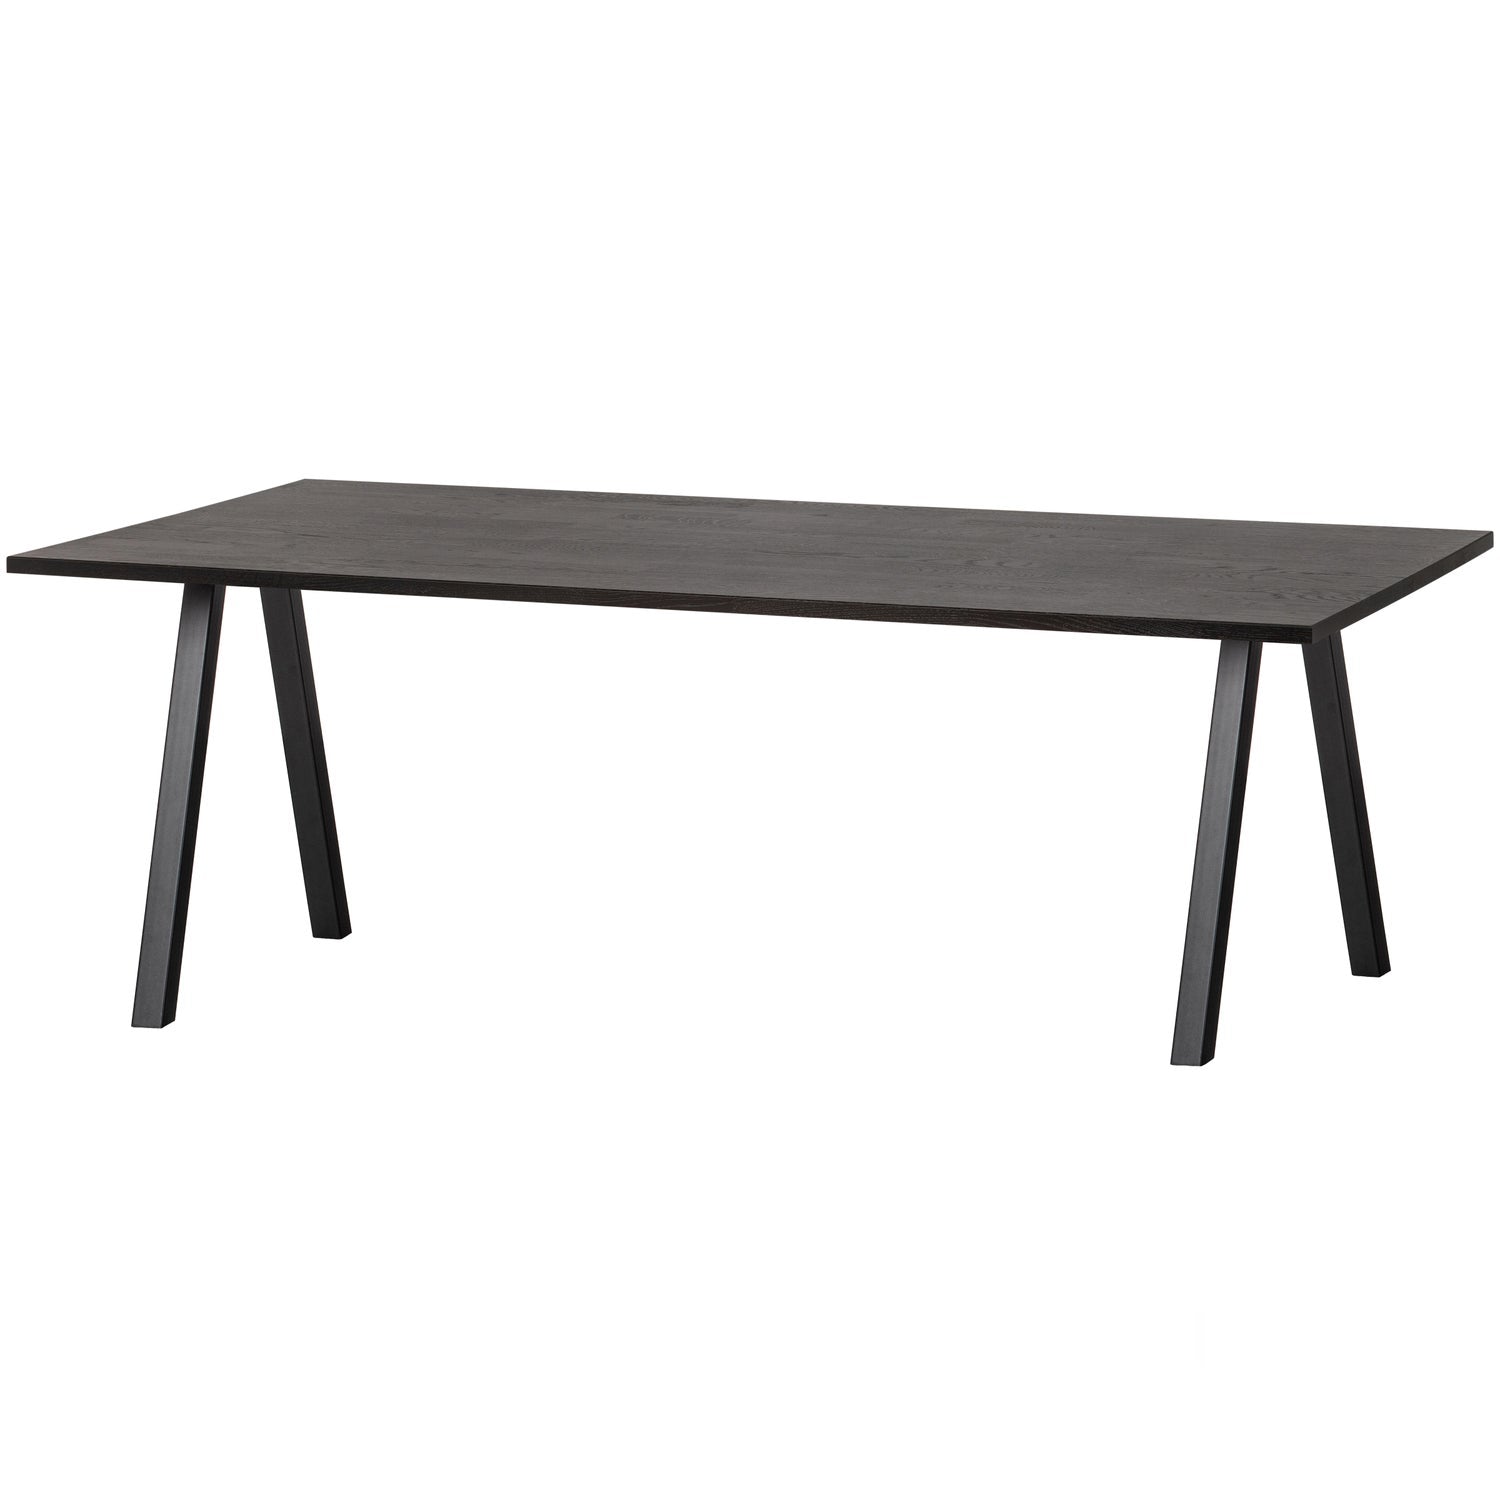 TABLO TABLE OAK BLACKNIGHT 160X90 [fsc] & SQUARE LEG